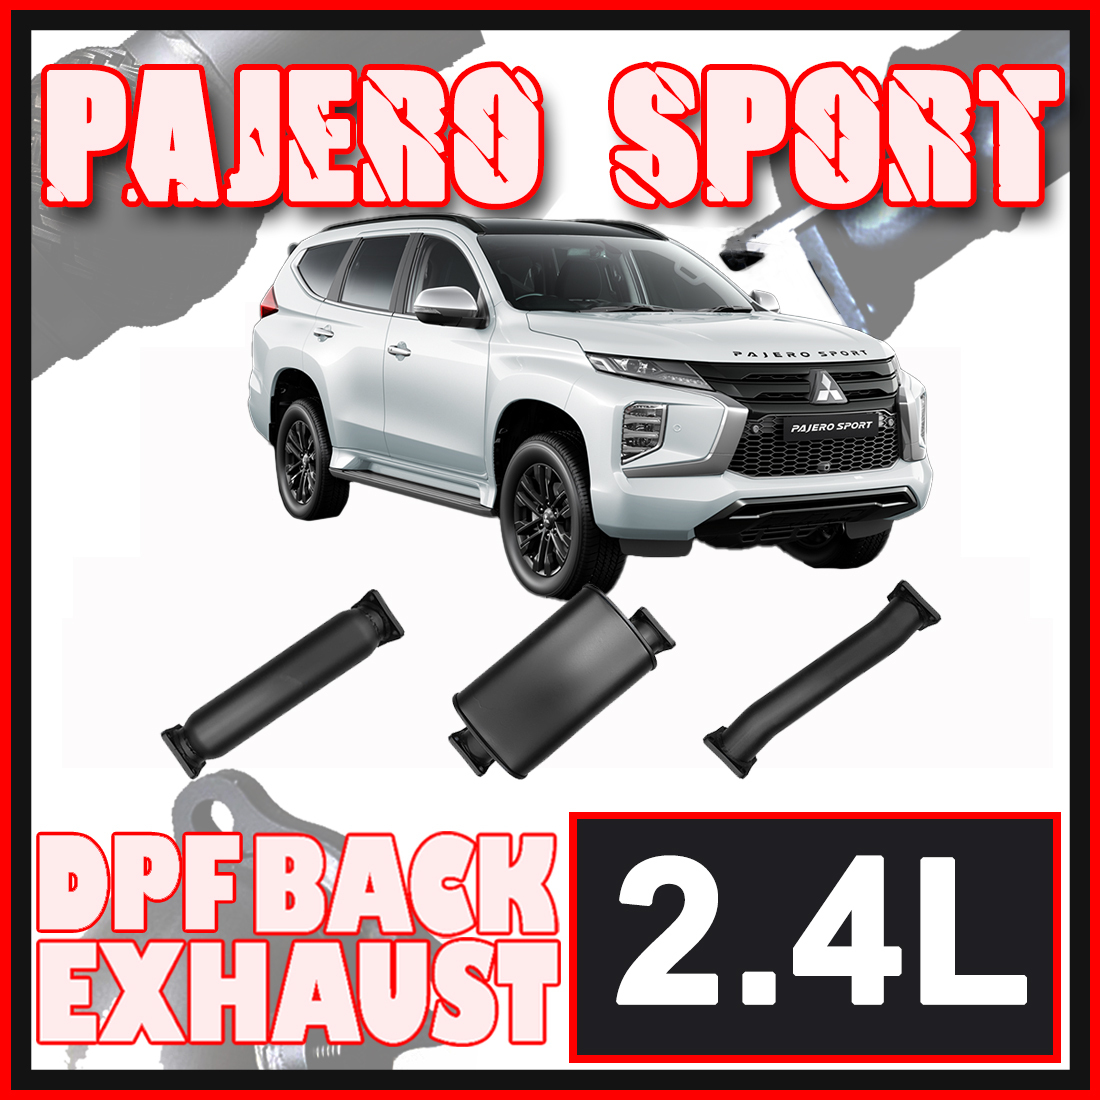 Mitsubishi QE Pajero Sport Exhaust 2.4L 3" DPF Back Systems image